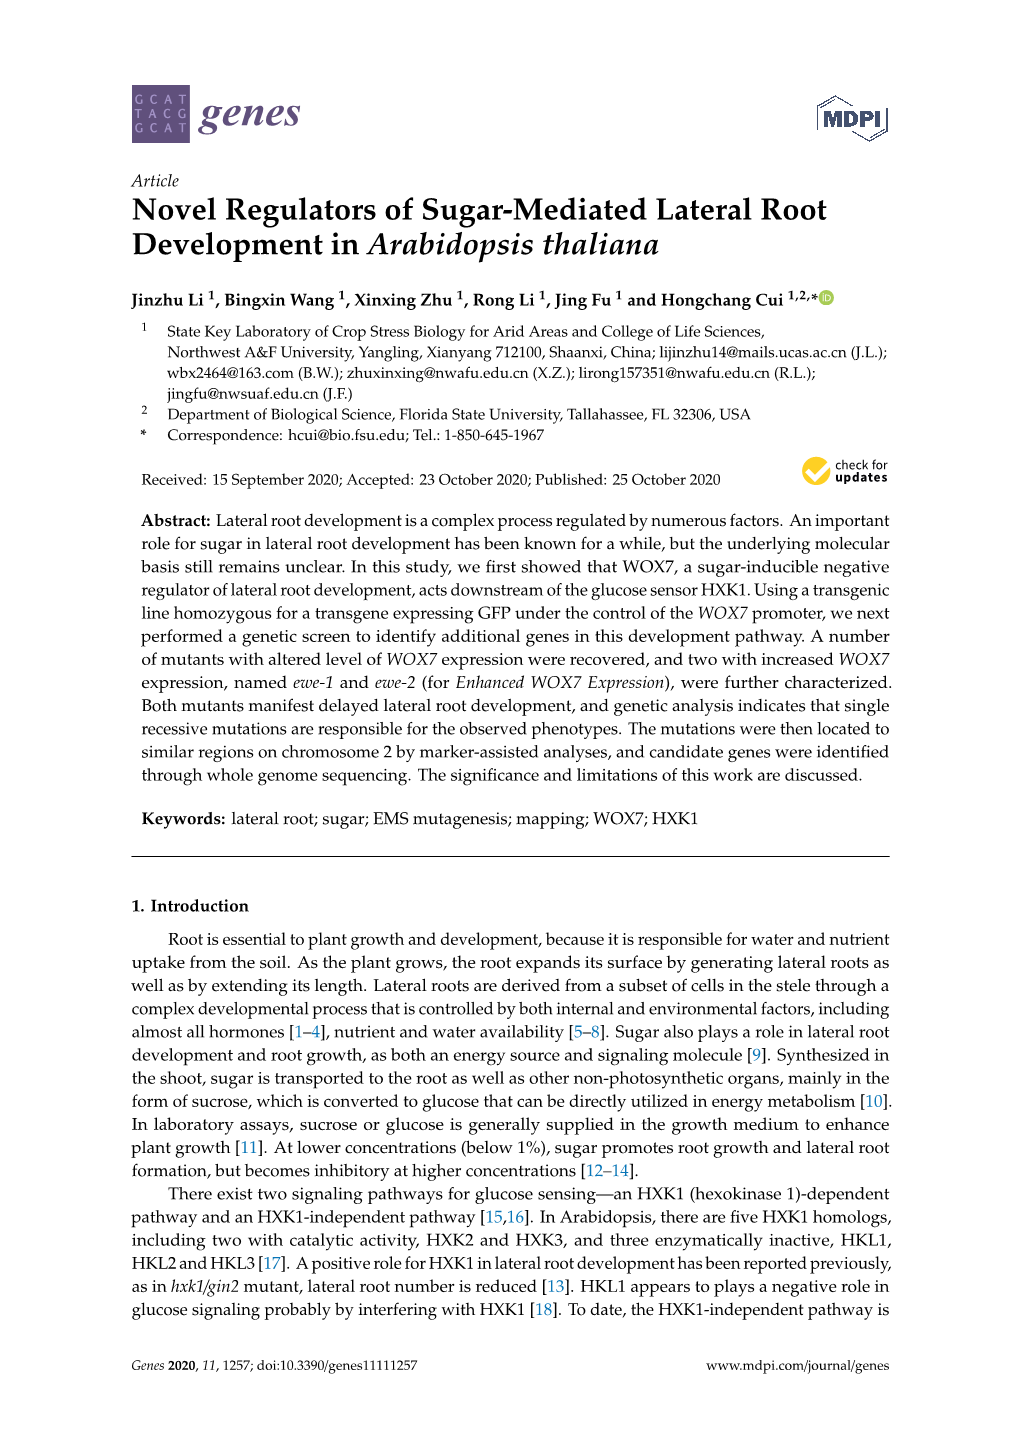 Novel Regulators of Sugar-Mediated Lateral Root Development in Arabidopsis Thaliana